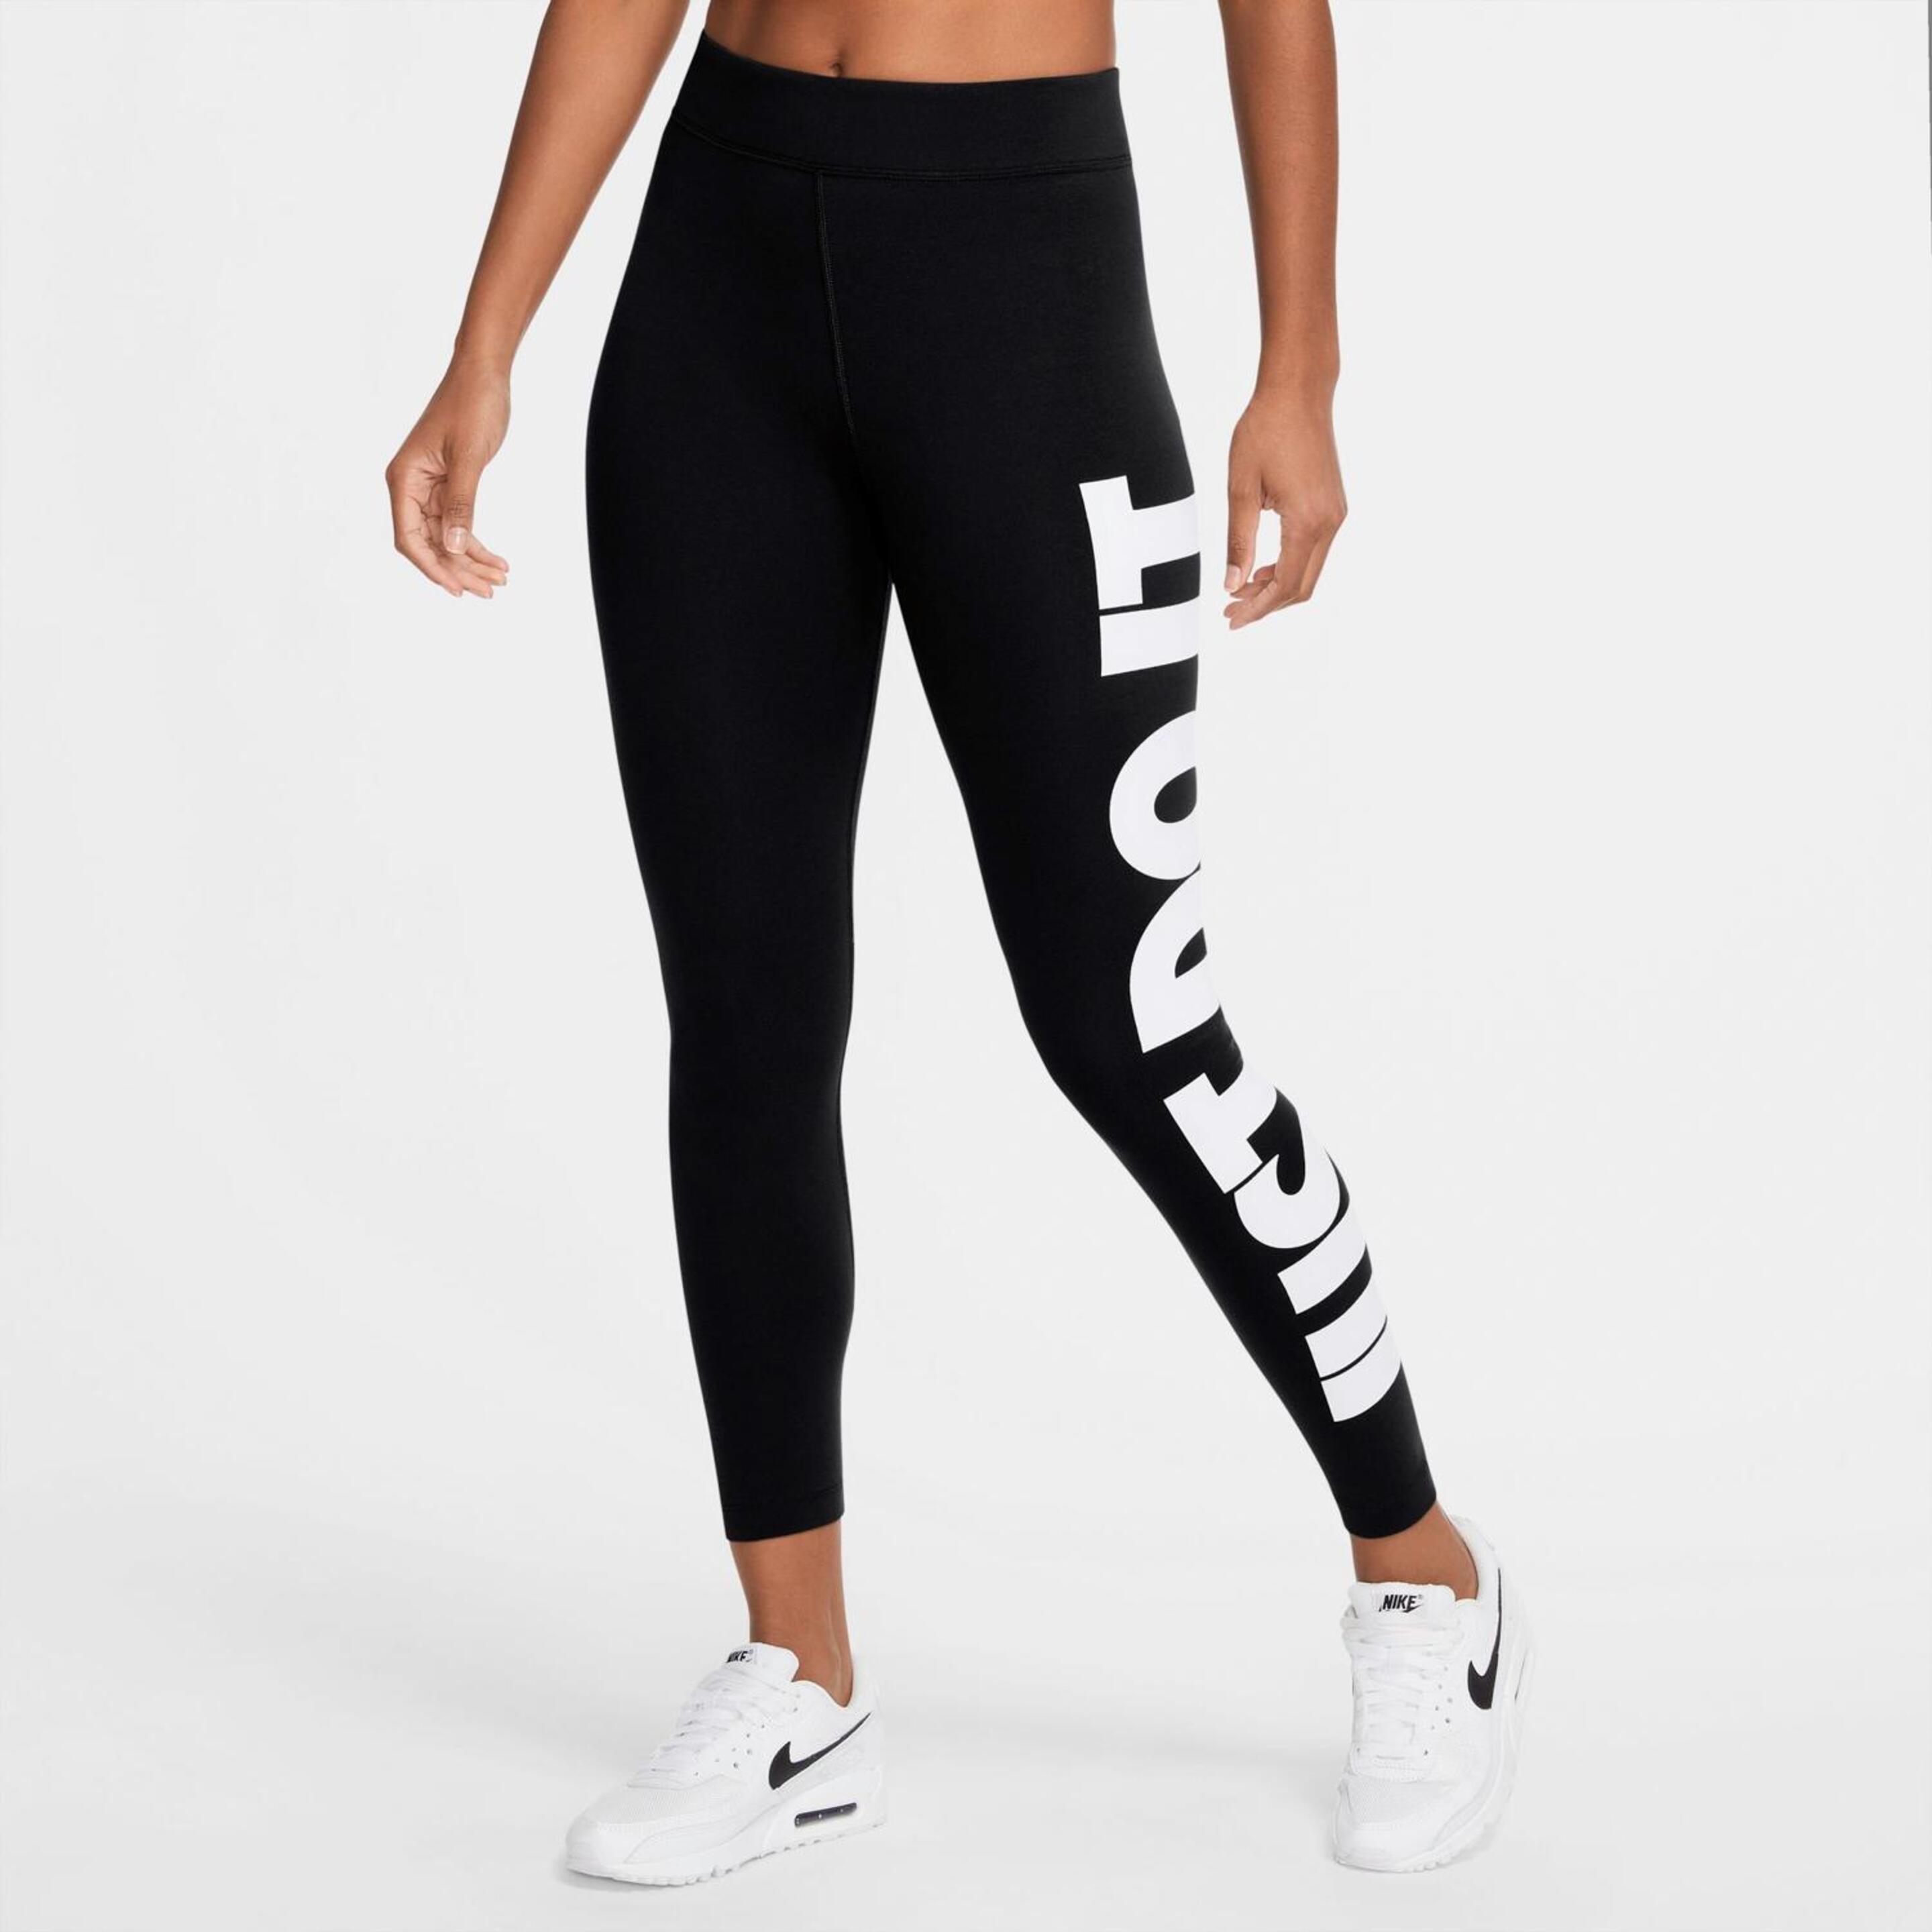 Nike Jdi - negro - Leggins Mujer